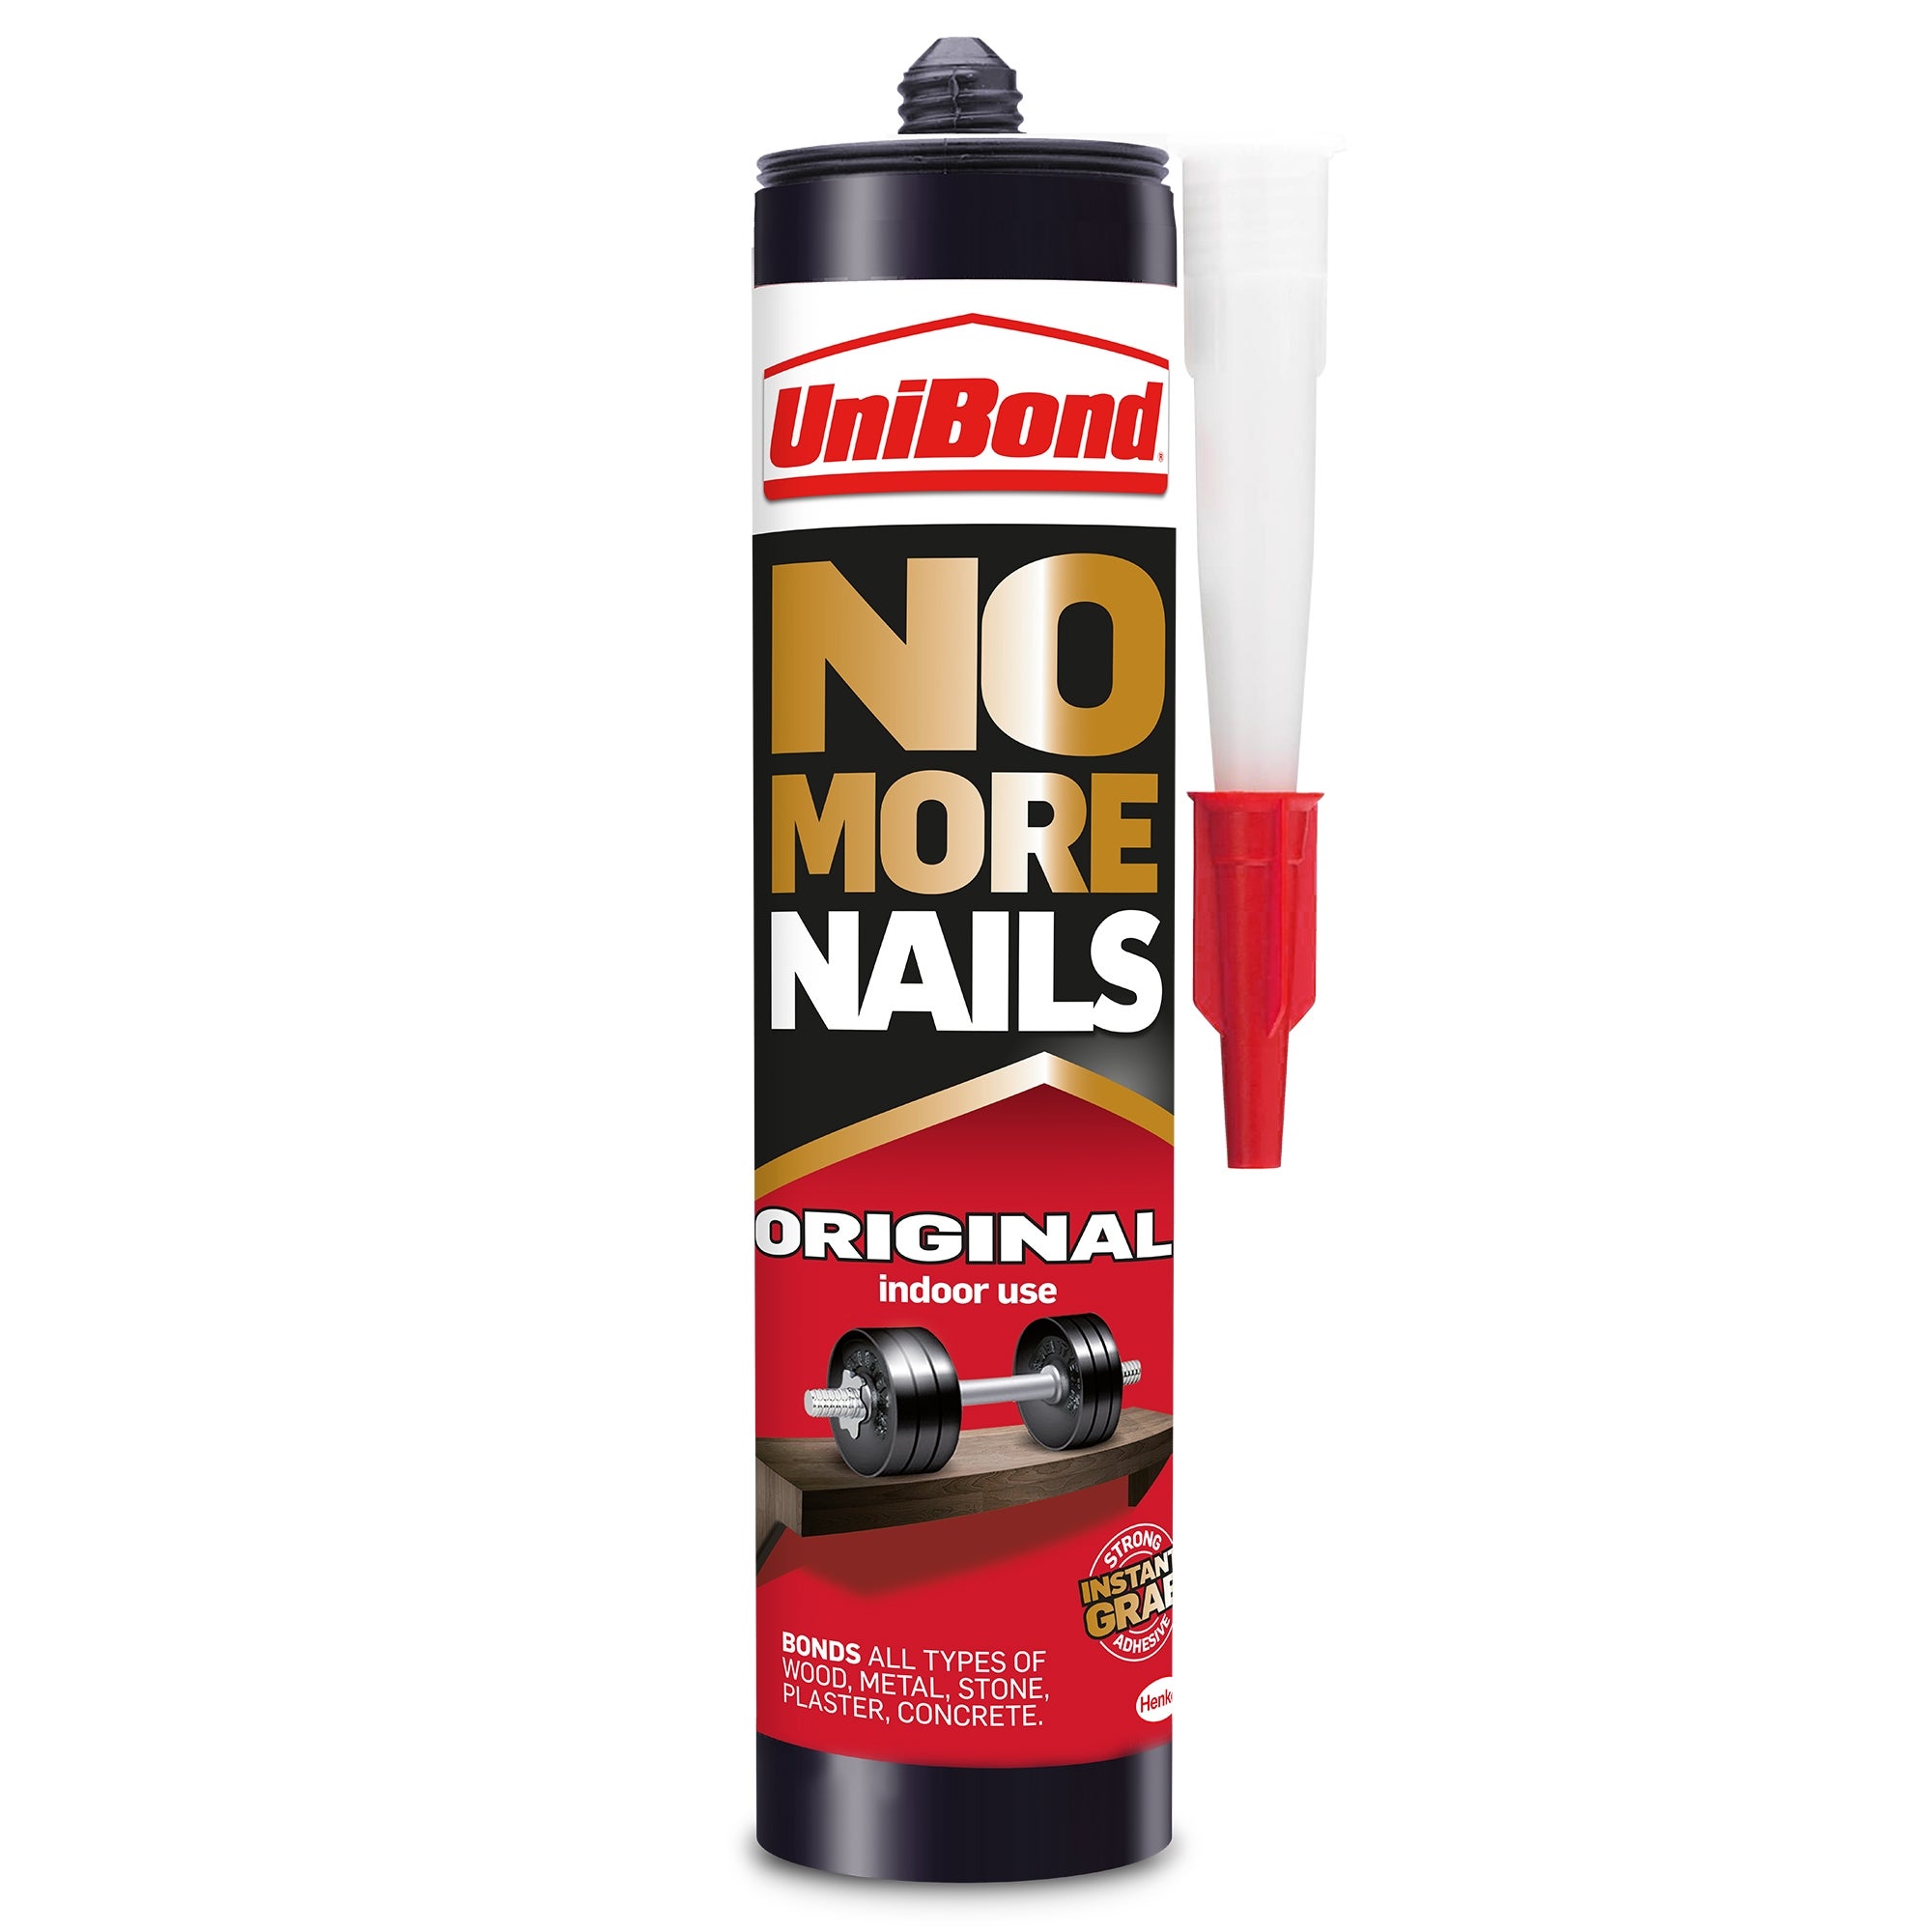 UniBond No More Nails Original Adhesive Cartridge 365g